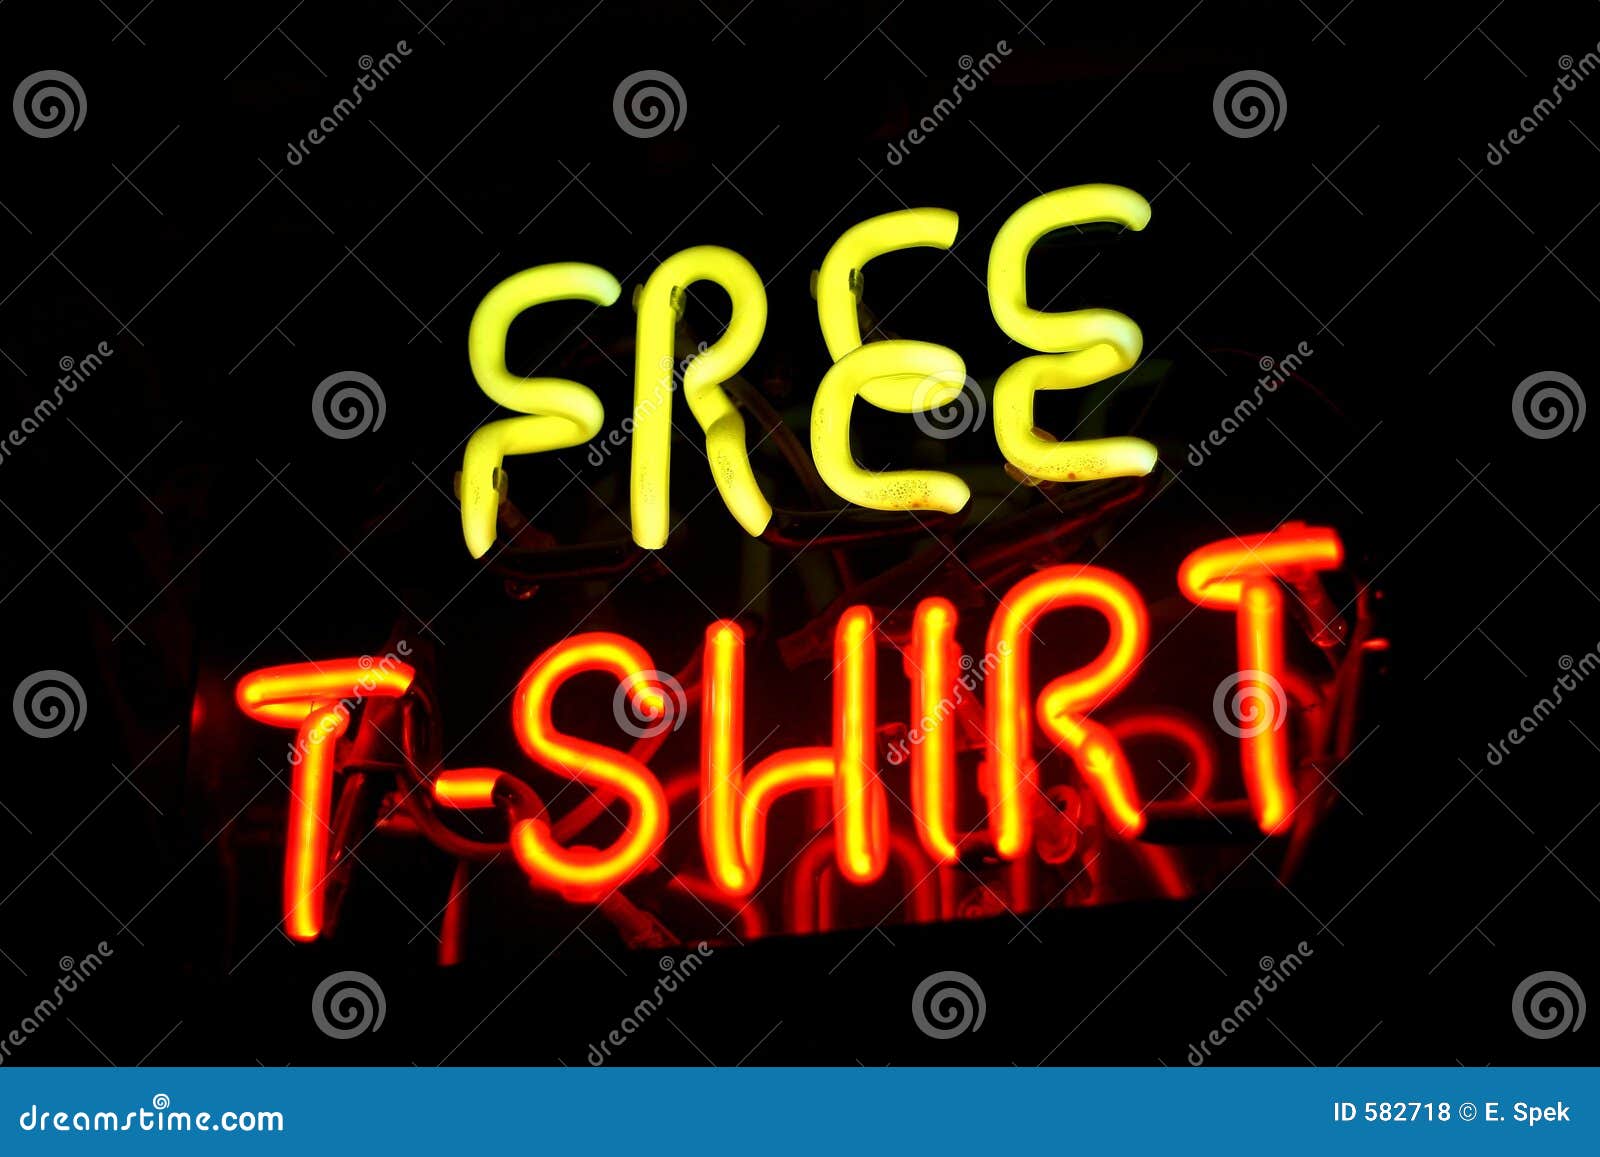 free t shirt